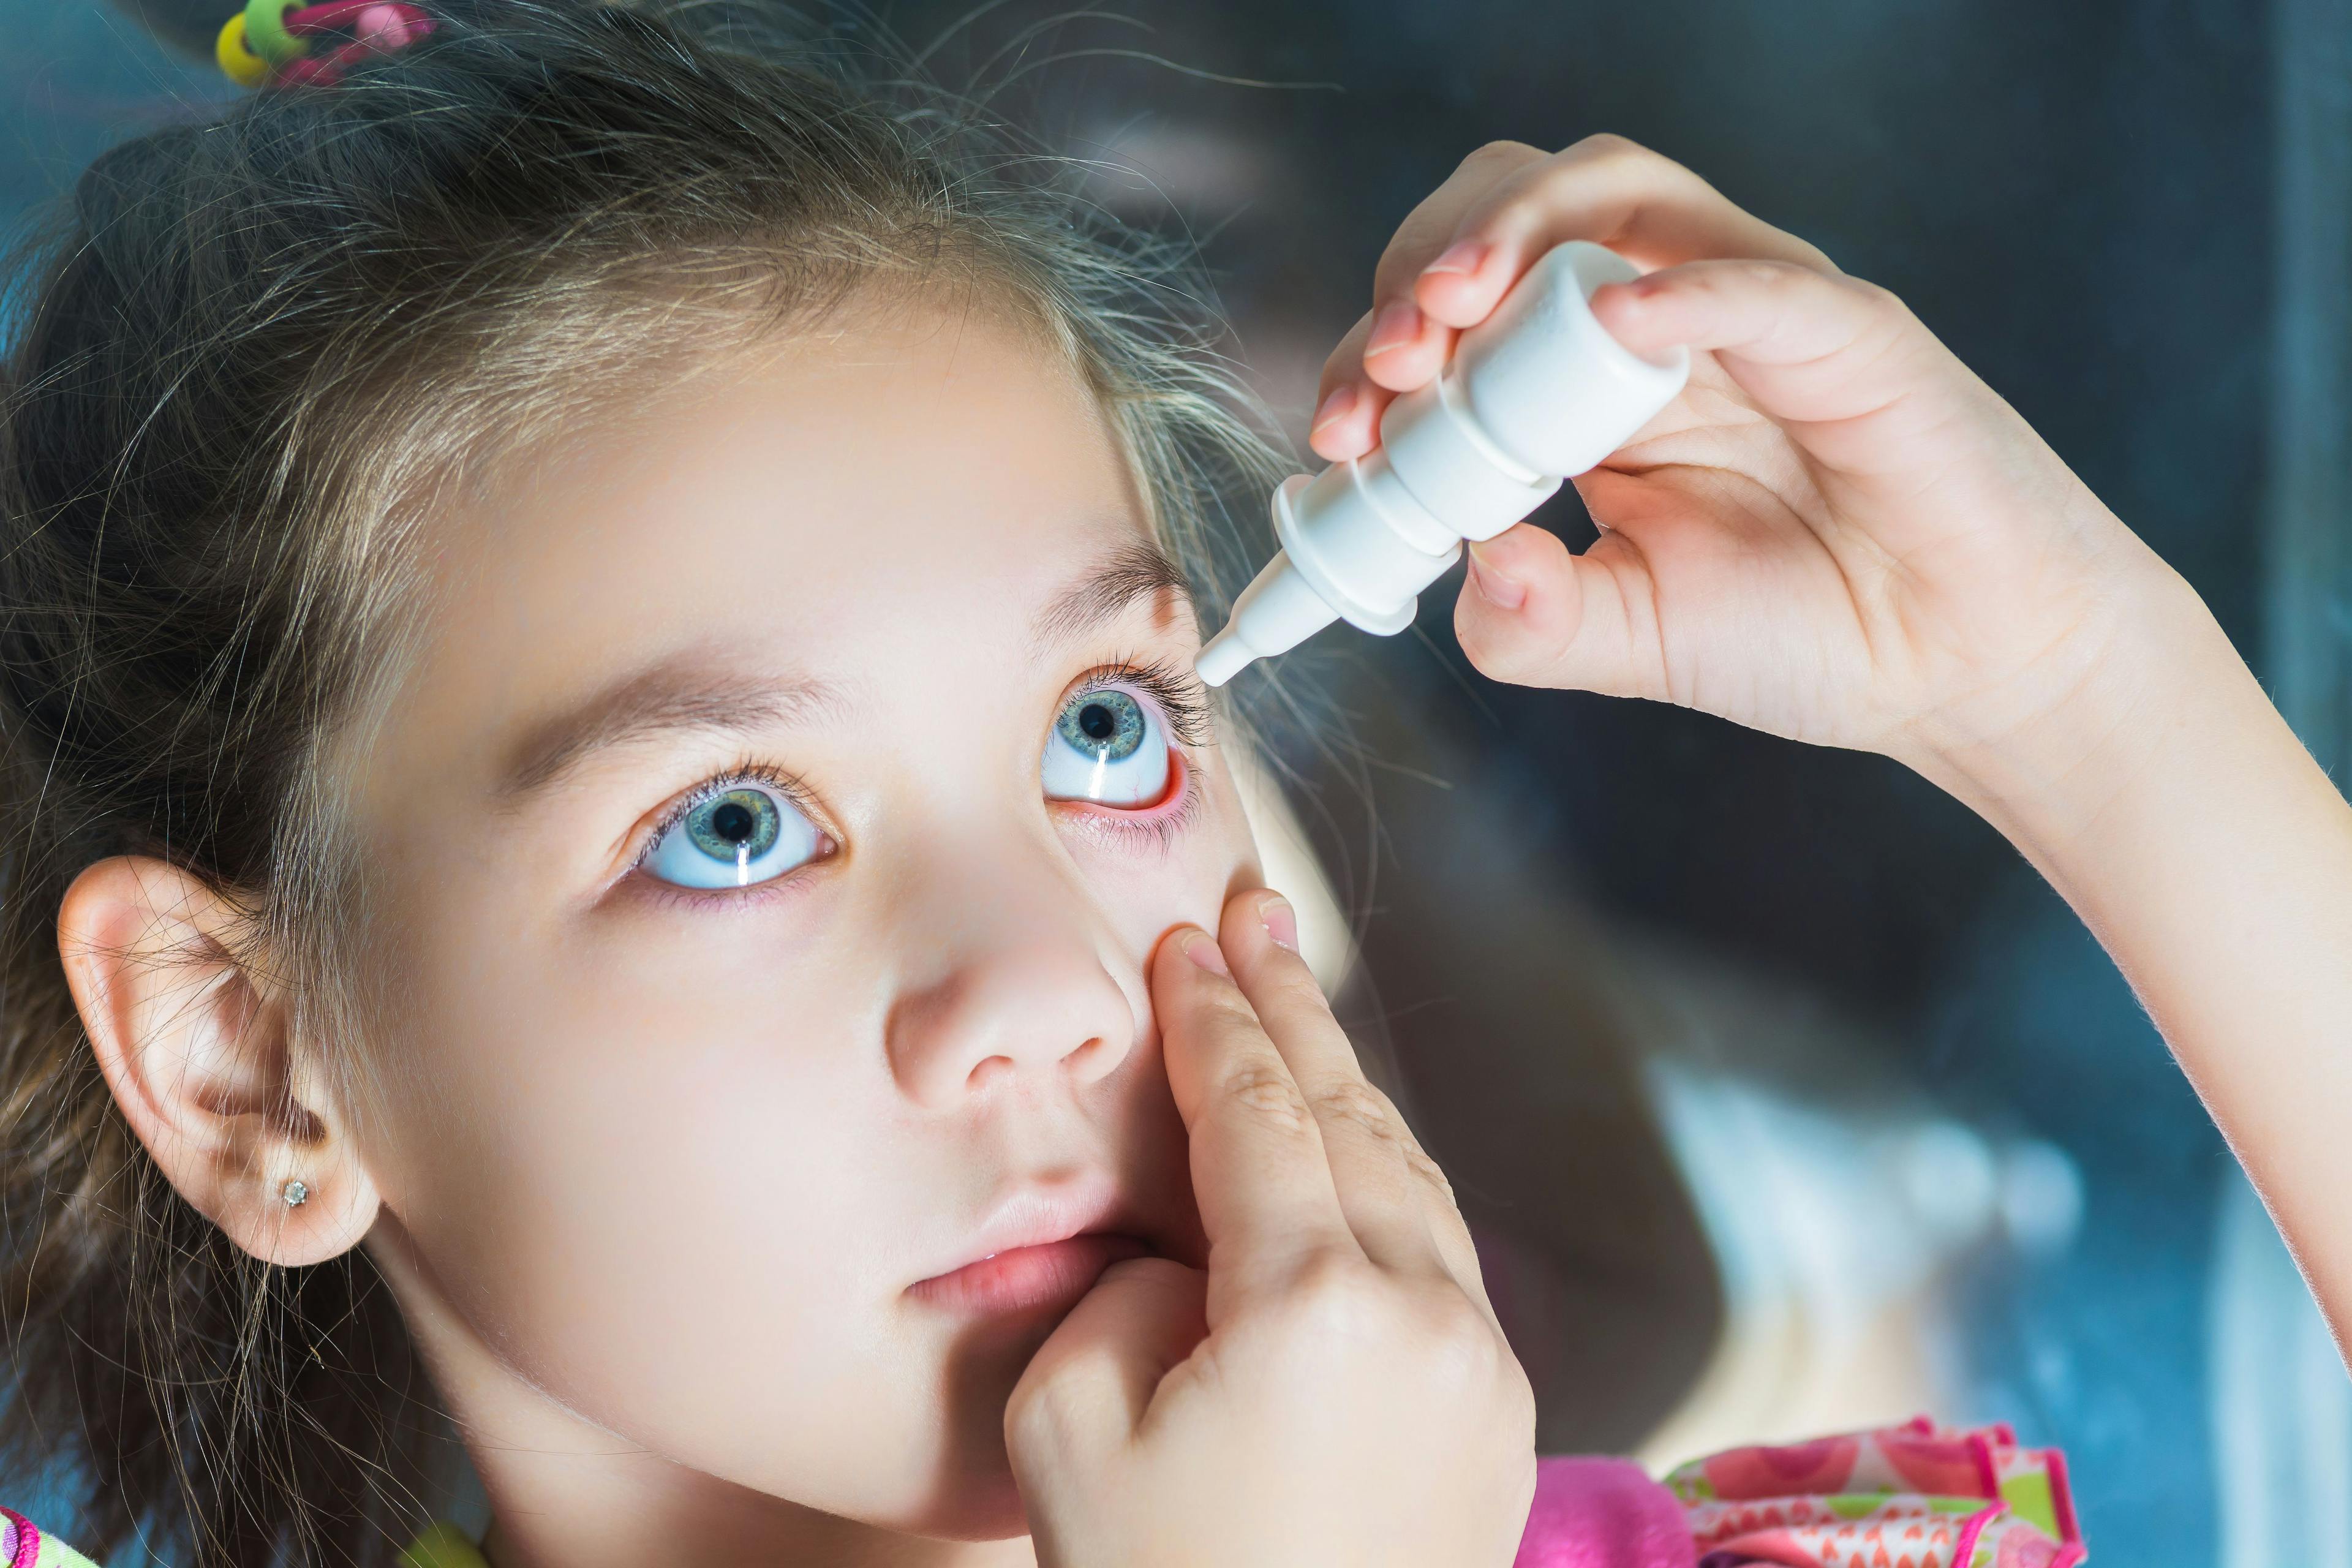 Medicated eye drops may delay myopia in children